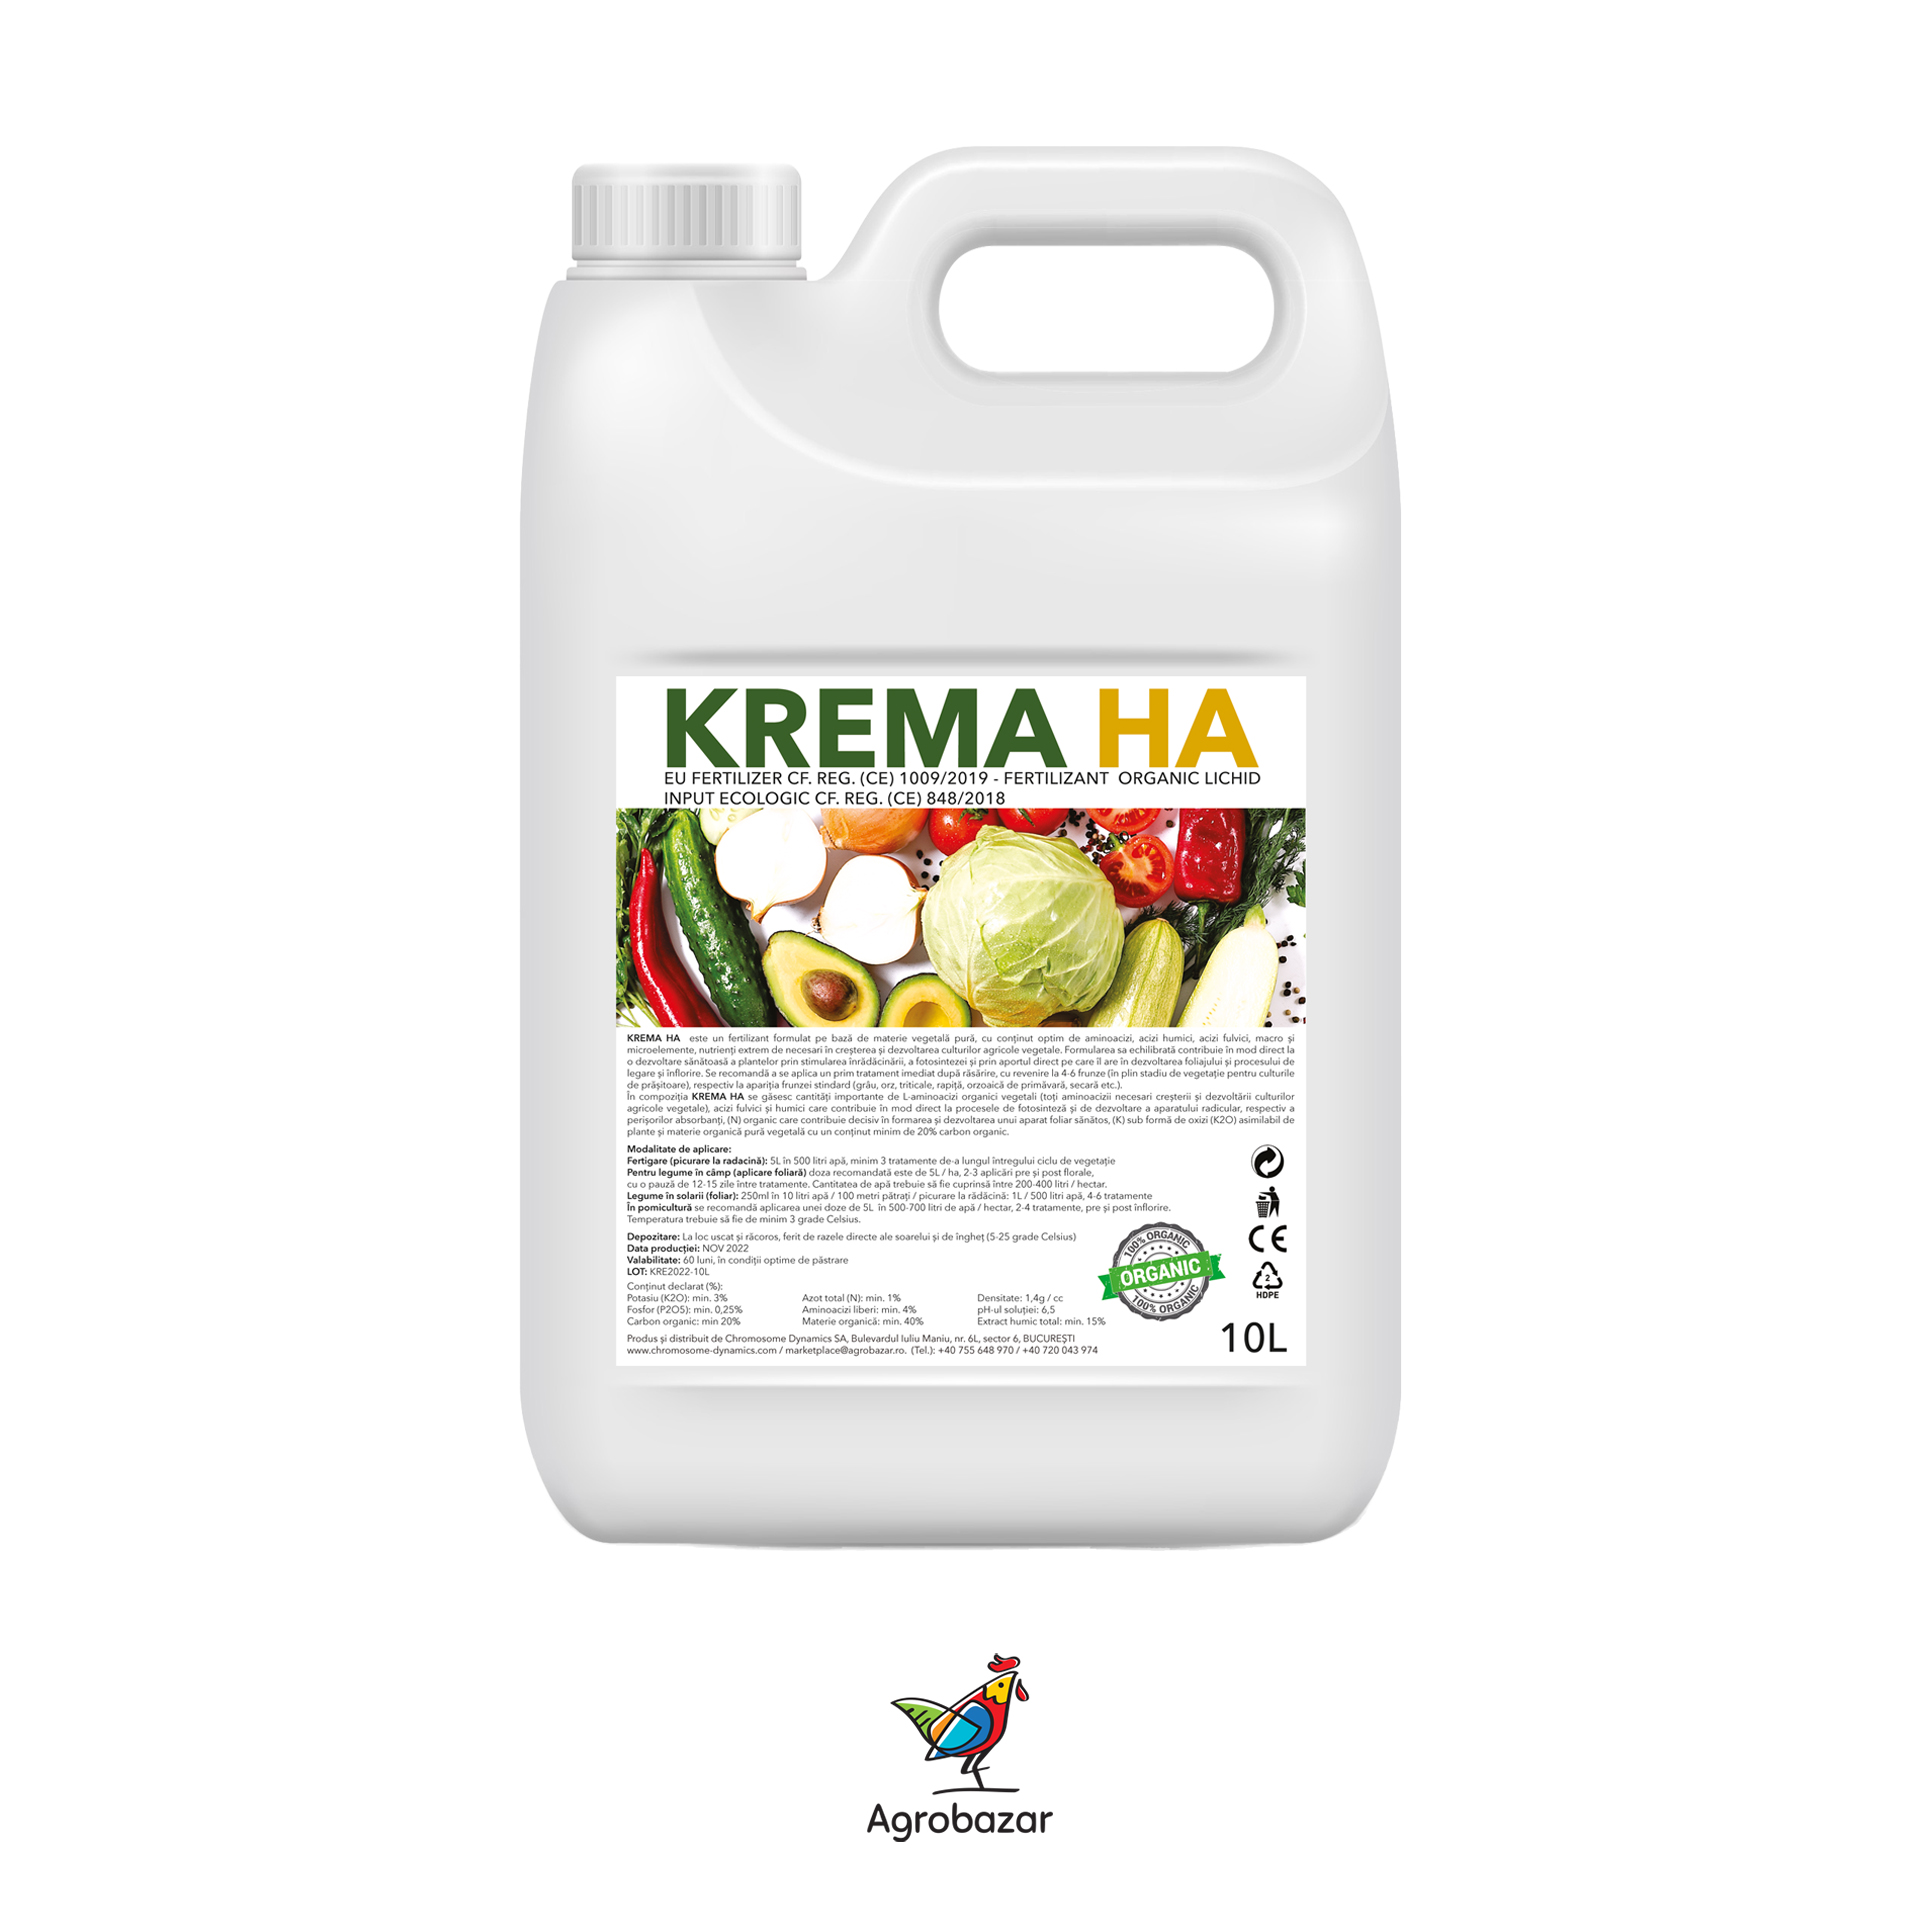 https://www.agrobazar.ro/krema-ha-fertilizant-organic-superconcentrat-pentru-legume-fructe-vita-de-vie-pomi-fructiferi-1l/